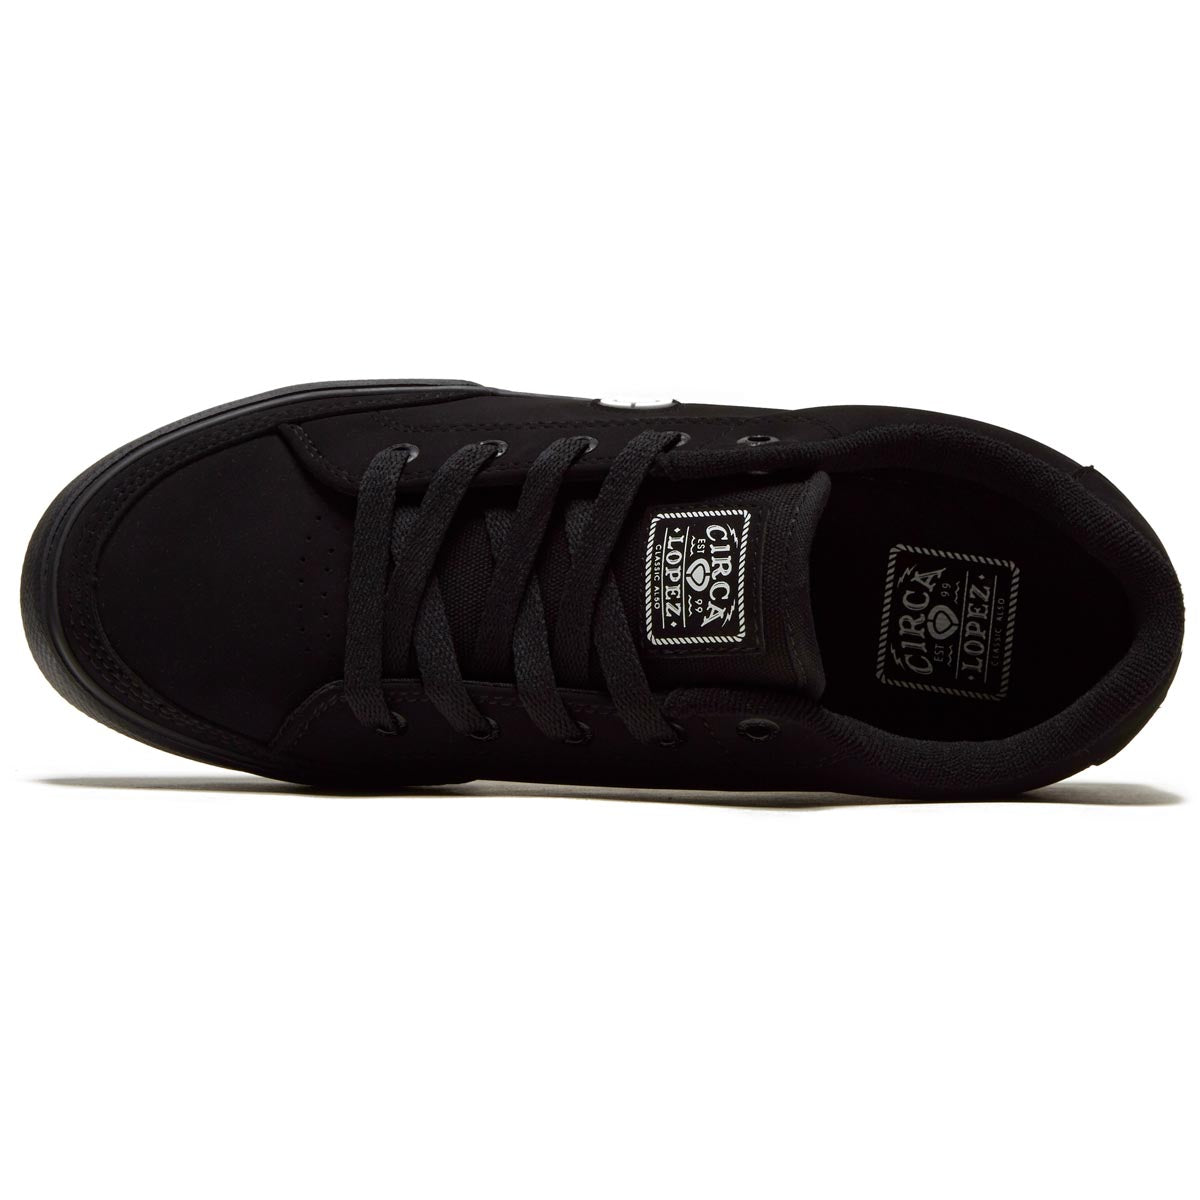 C1rca AL 50 Slim Shoes - Black/Black image 3